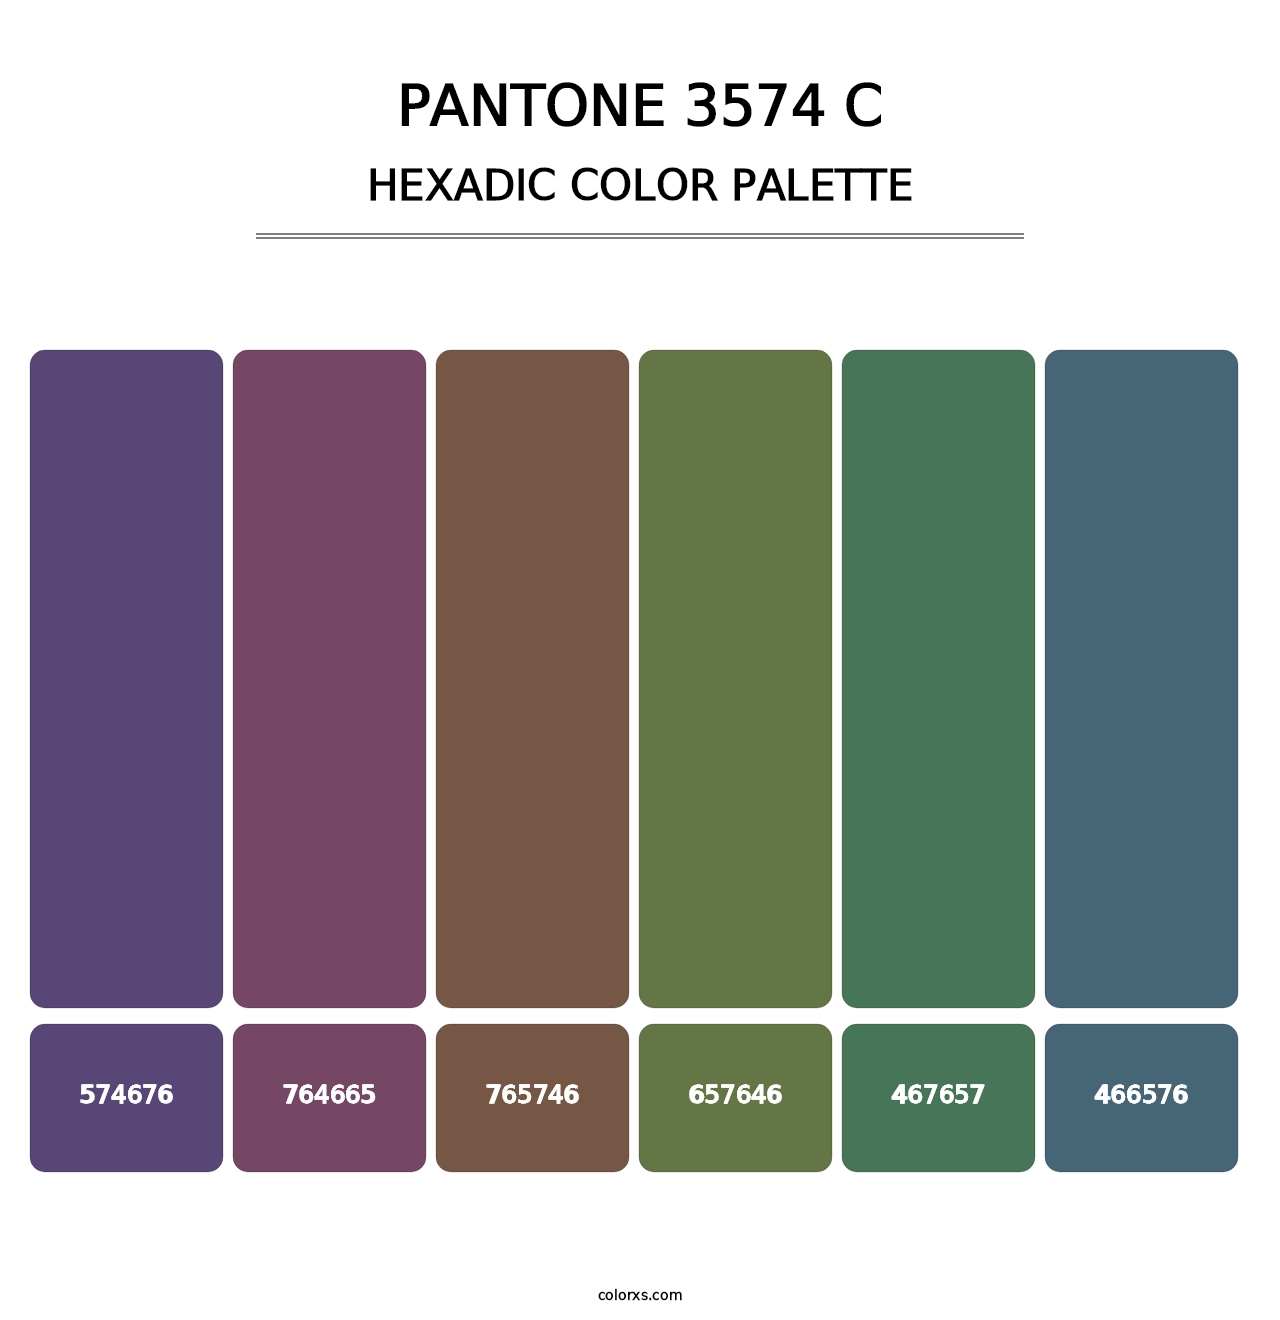 PANTONE 3574 C - Hexadic Color Palette